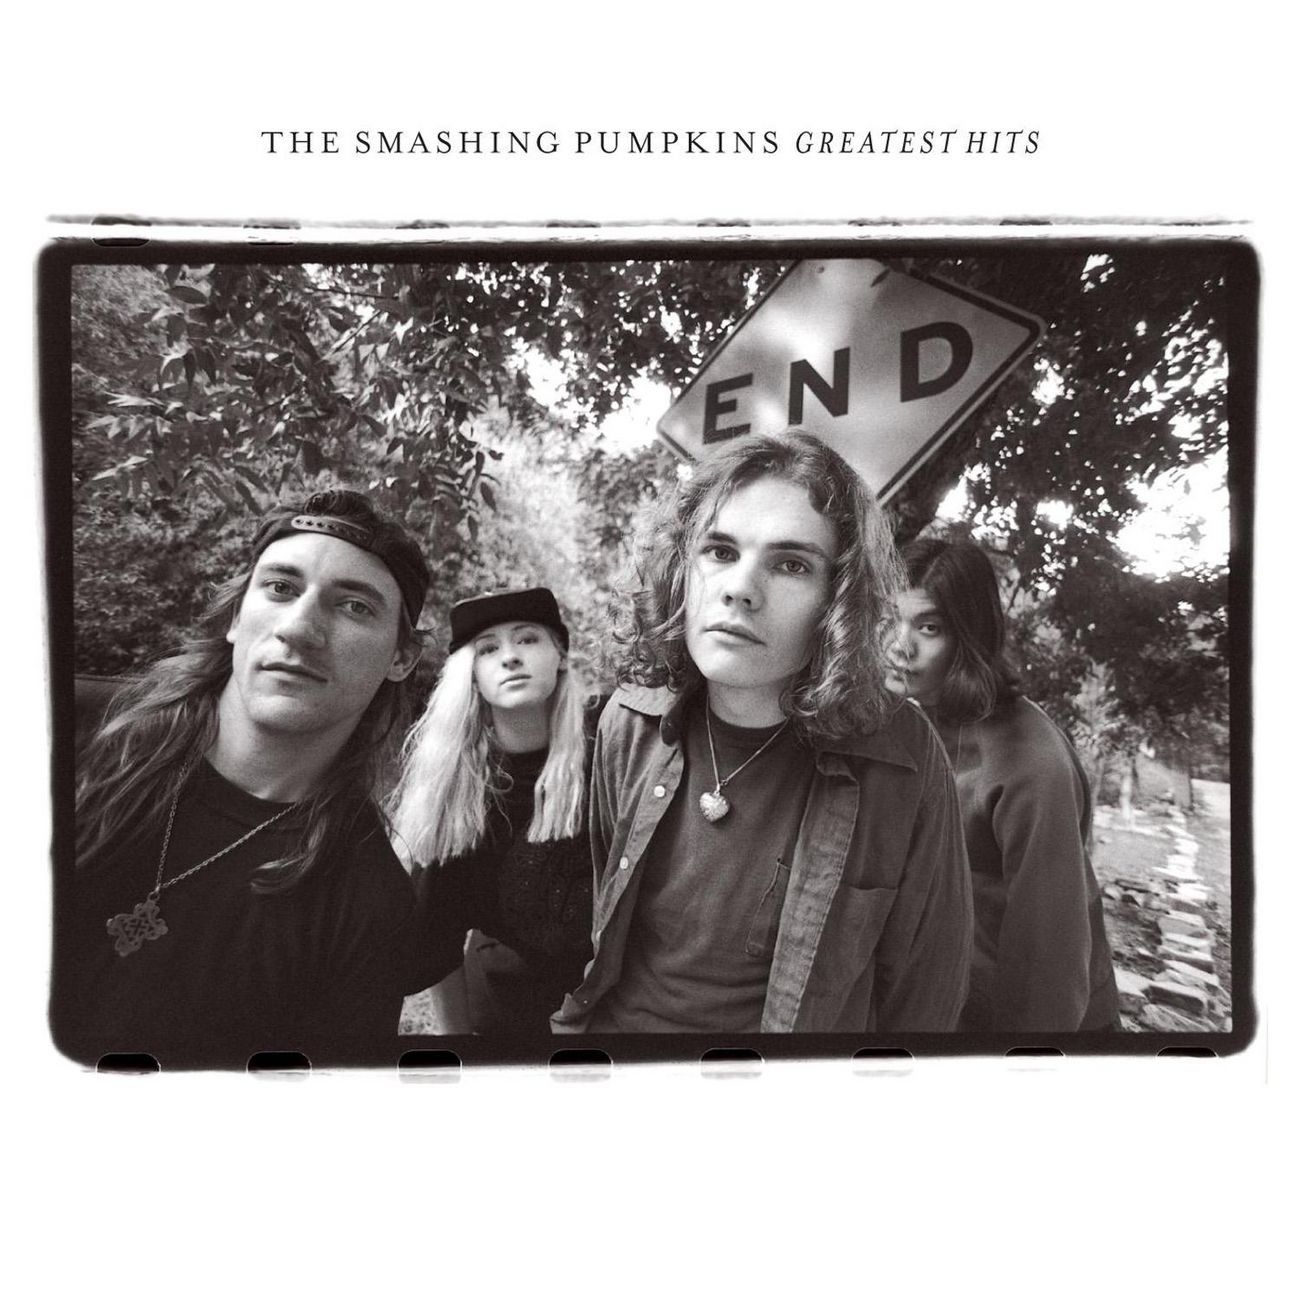 THE SMASHING PUMPKINS - GREATEST HITS (2001) - CD ALTERNATIVE ROCK GRUNGE AMBALAJINDA SIFIR